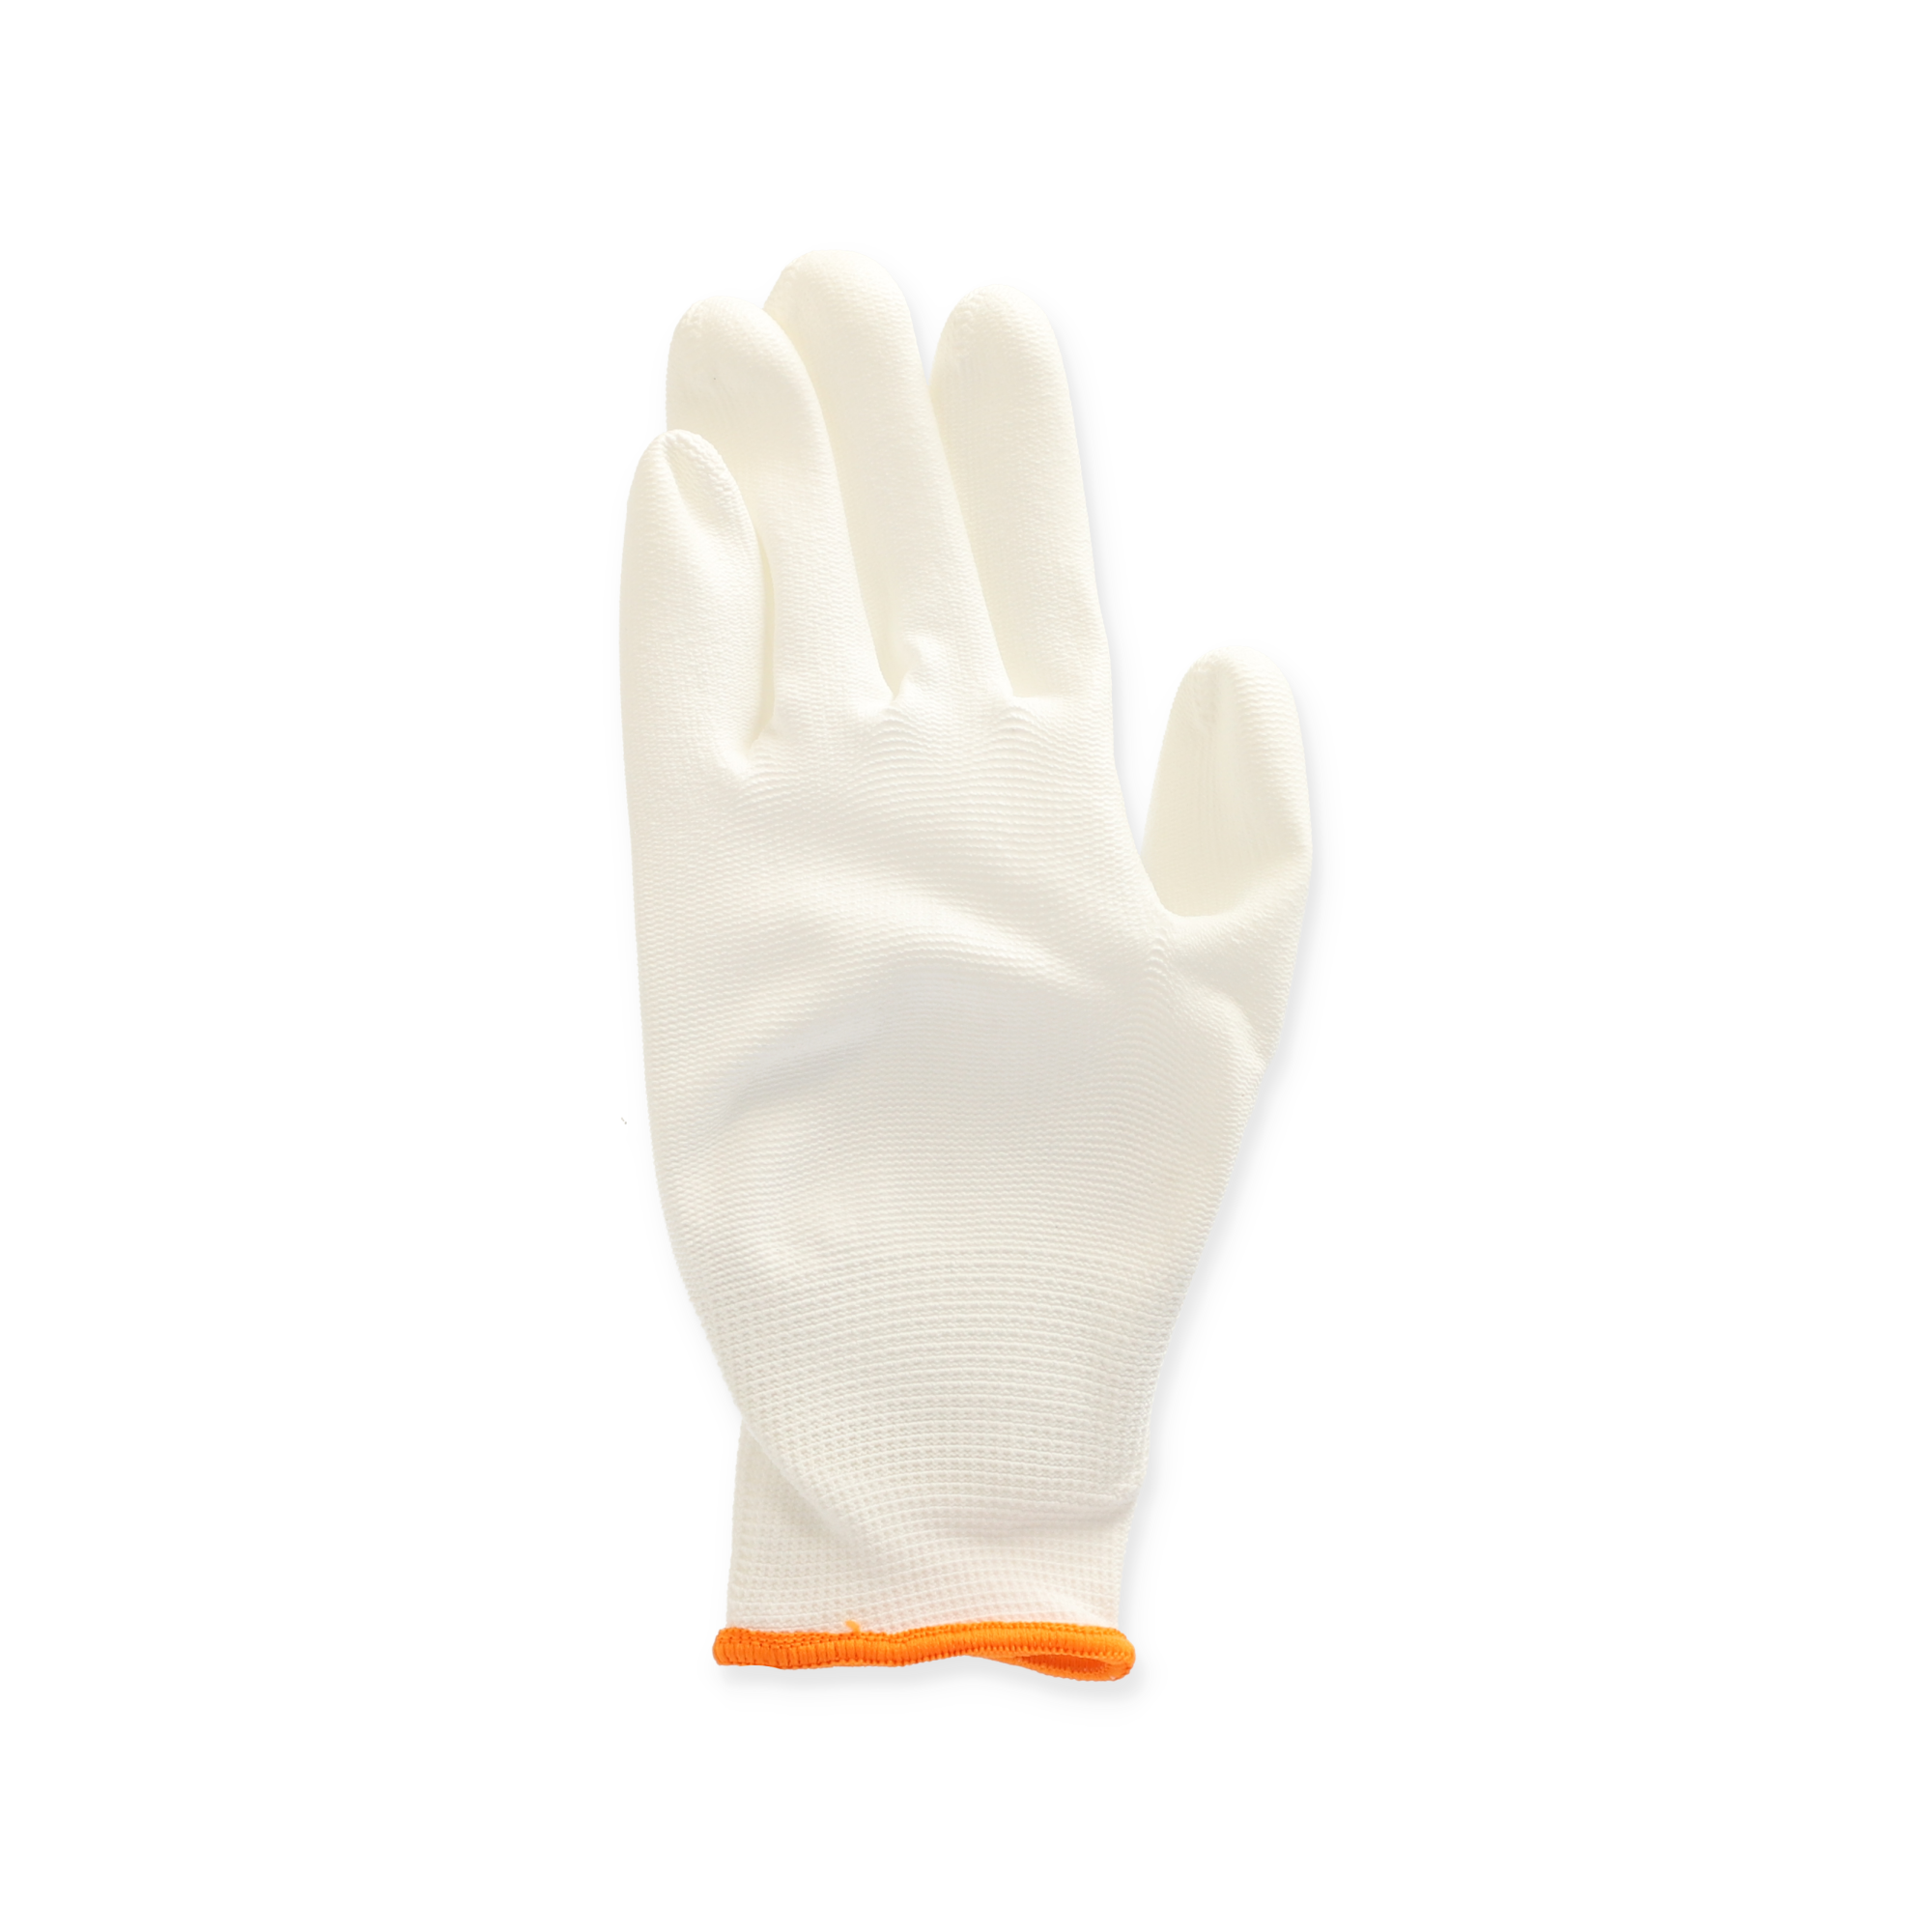 Handschuhe 'Micro Flex' weiß Gr. 11 + product picture